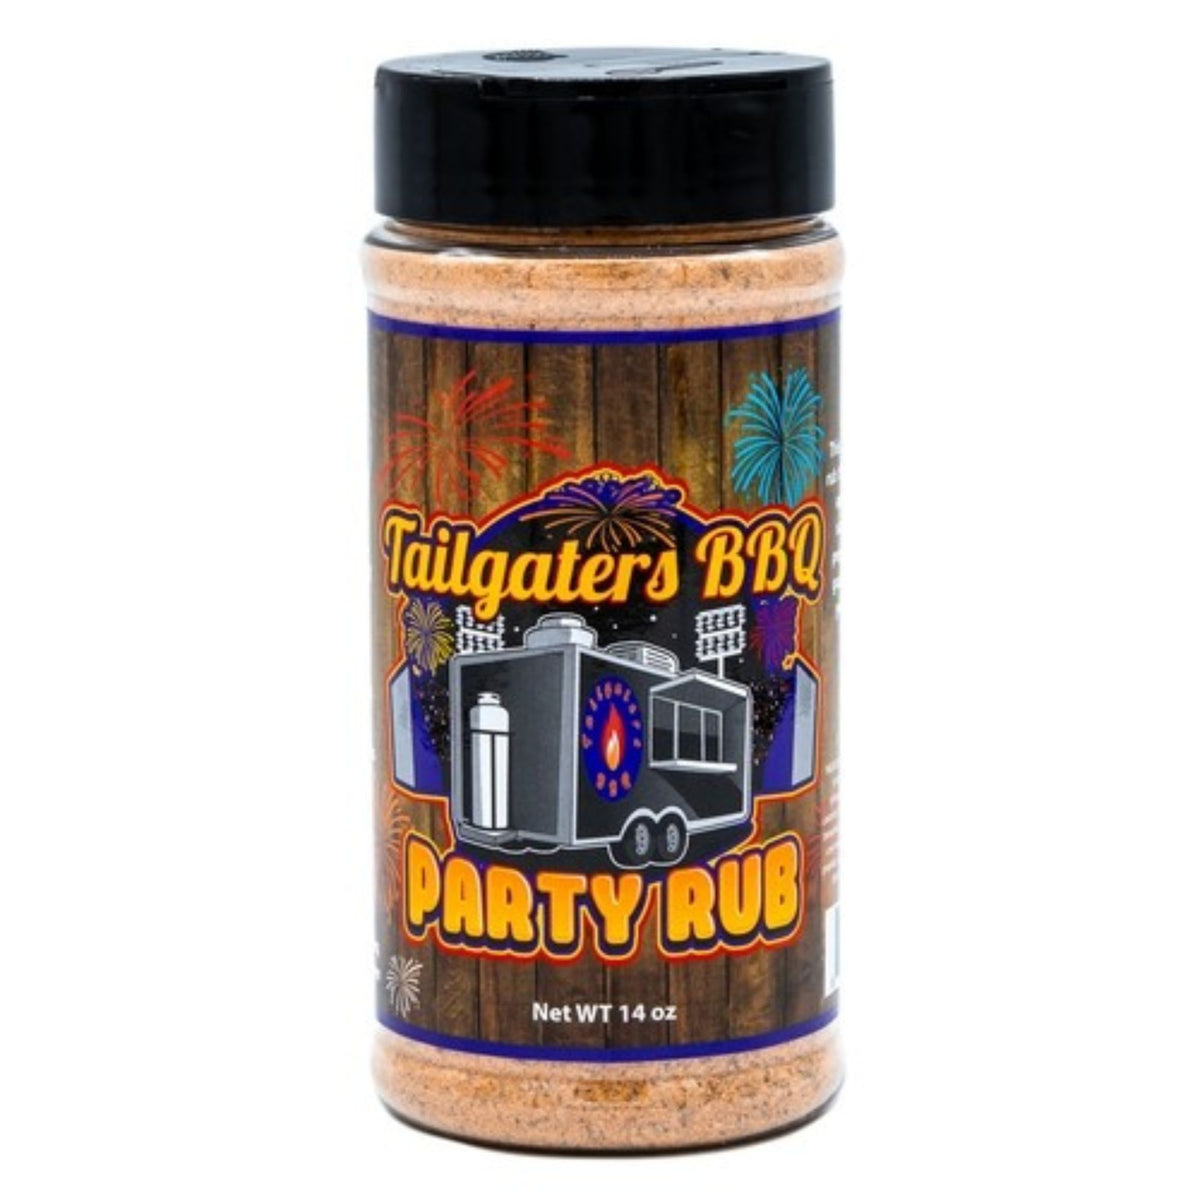 SUCKLEBUSTERS | TAILGATERS BBQ PARTY RUB - Un condimento speciale!